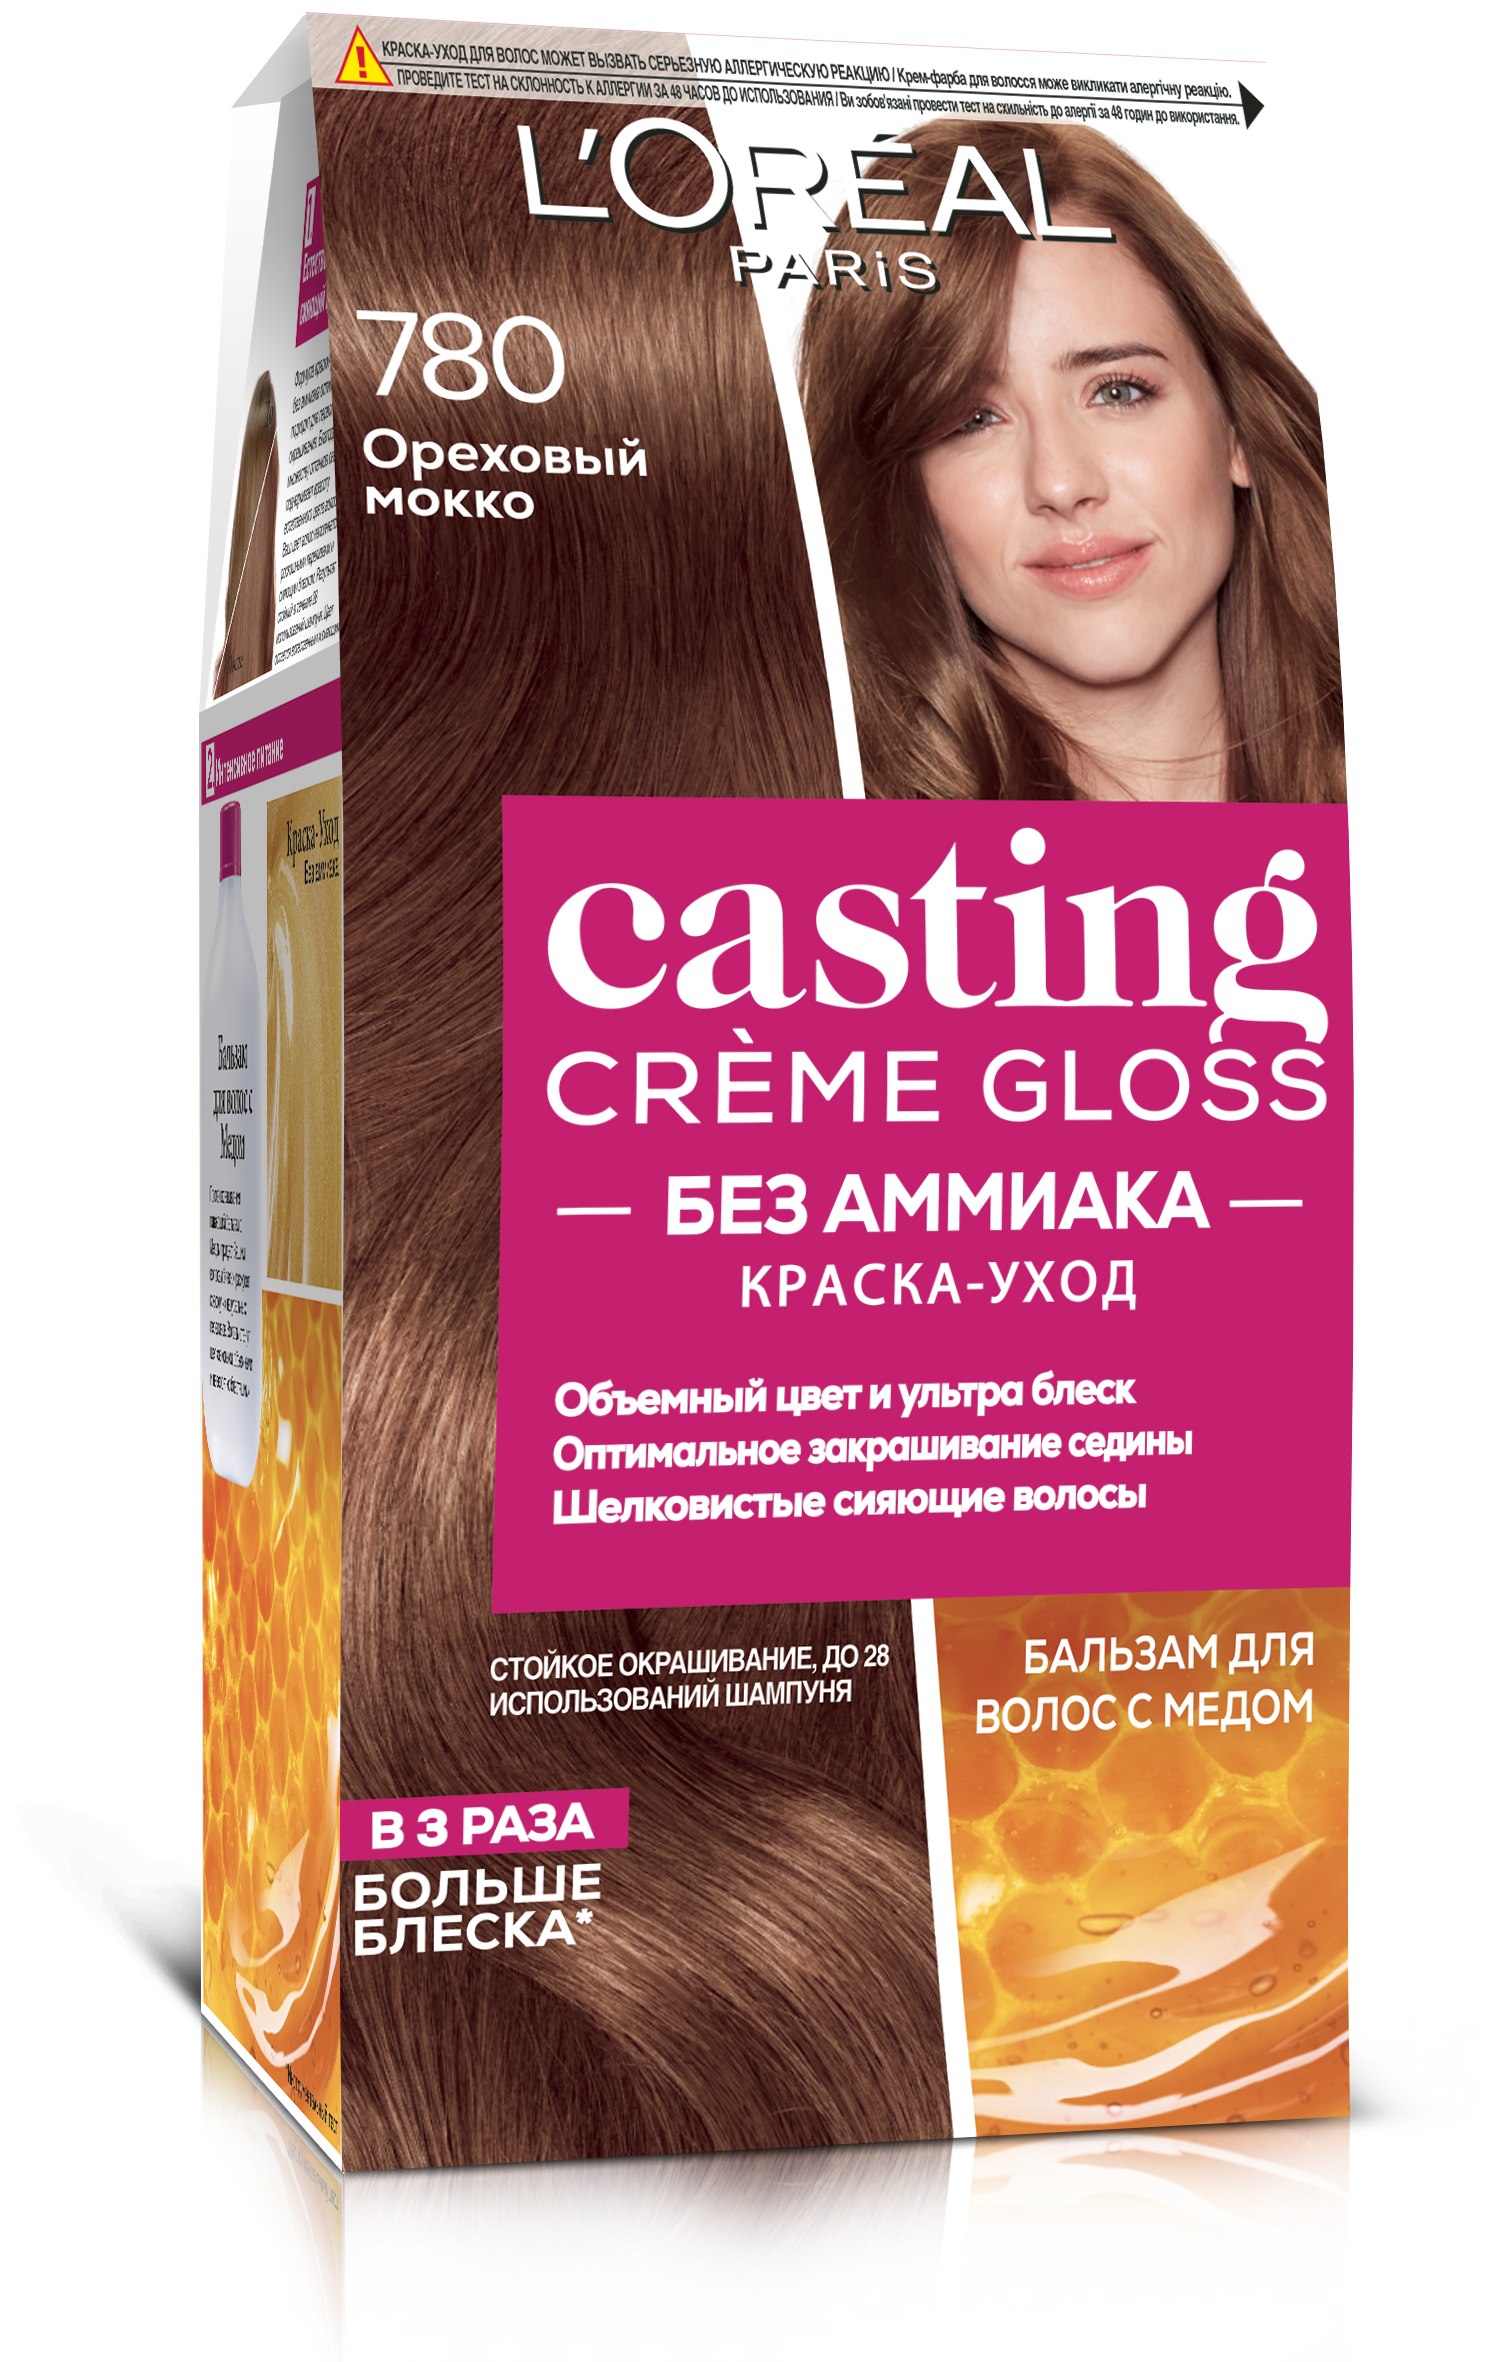 Краска-уход для волос без аммиака L'Oreal Paris Casting Creme Gloss, тон 780 (Ореховый мокко), 120 мл (A8862476) - фото 1